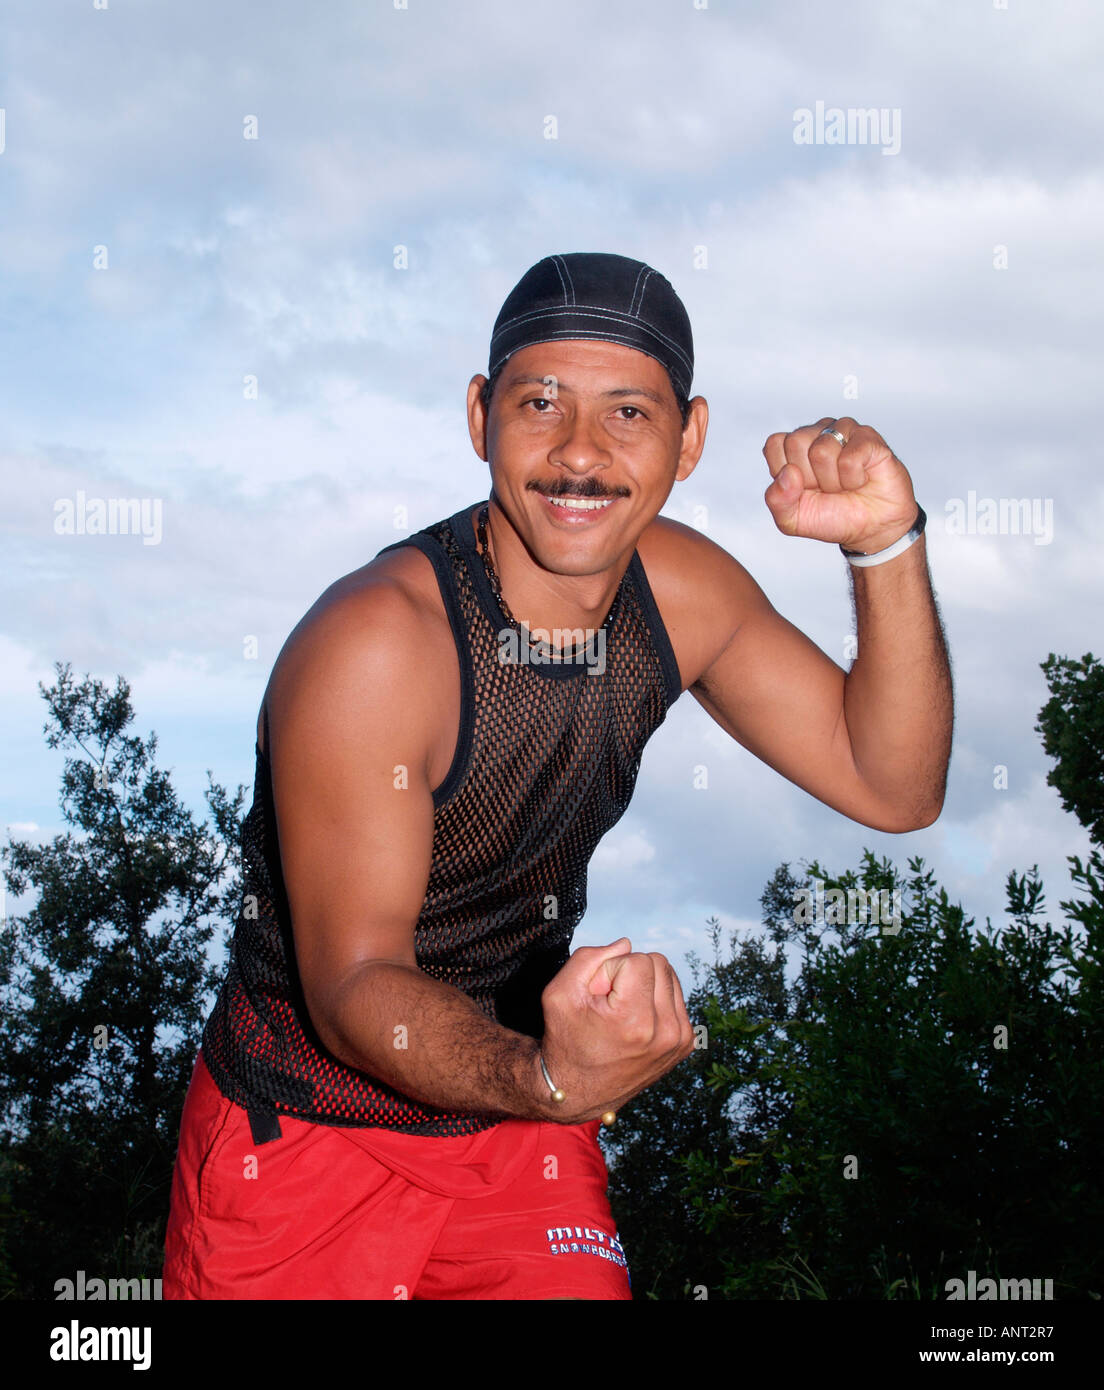 man in boxing pose wearing black string vest Stock Photo - Alamy